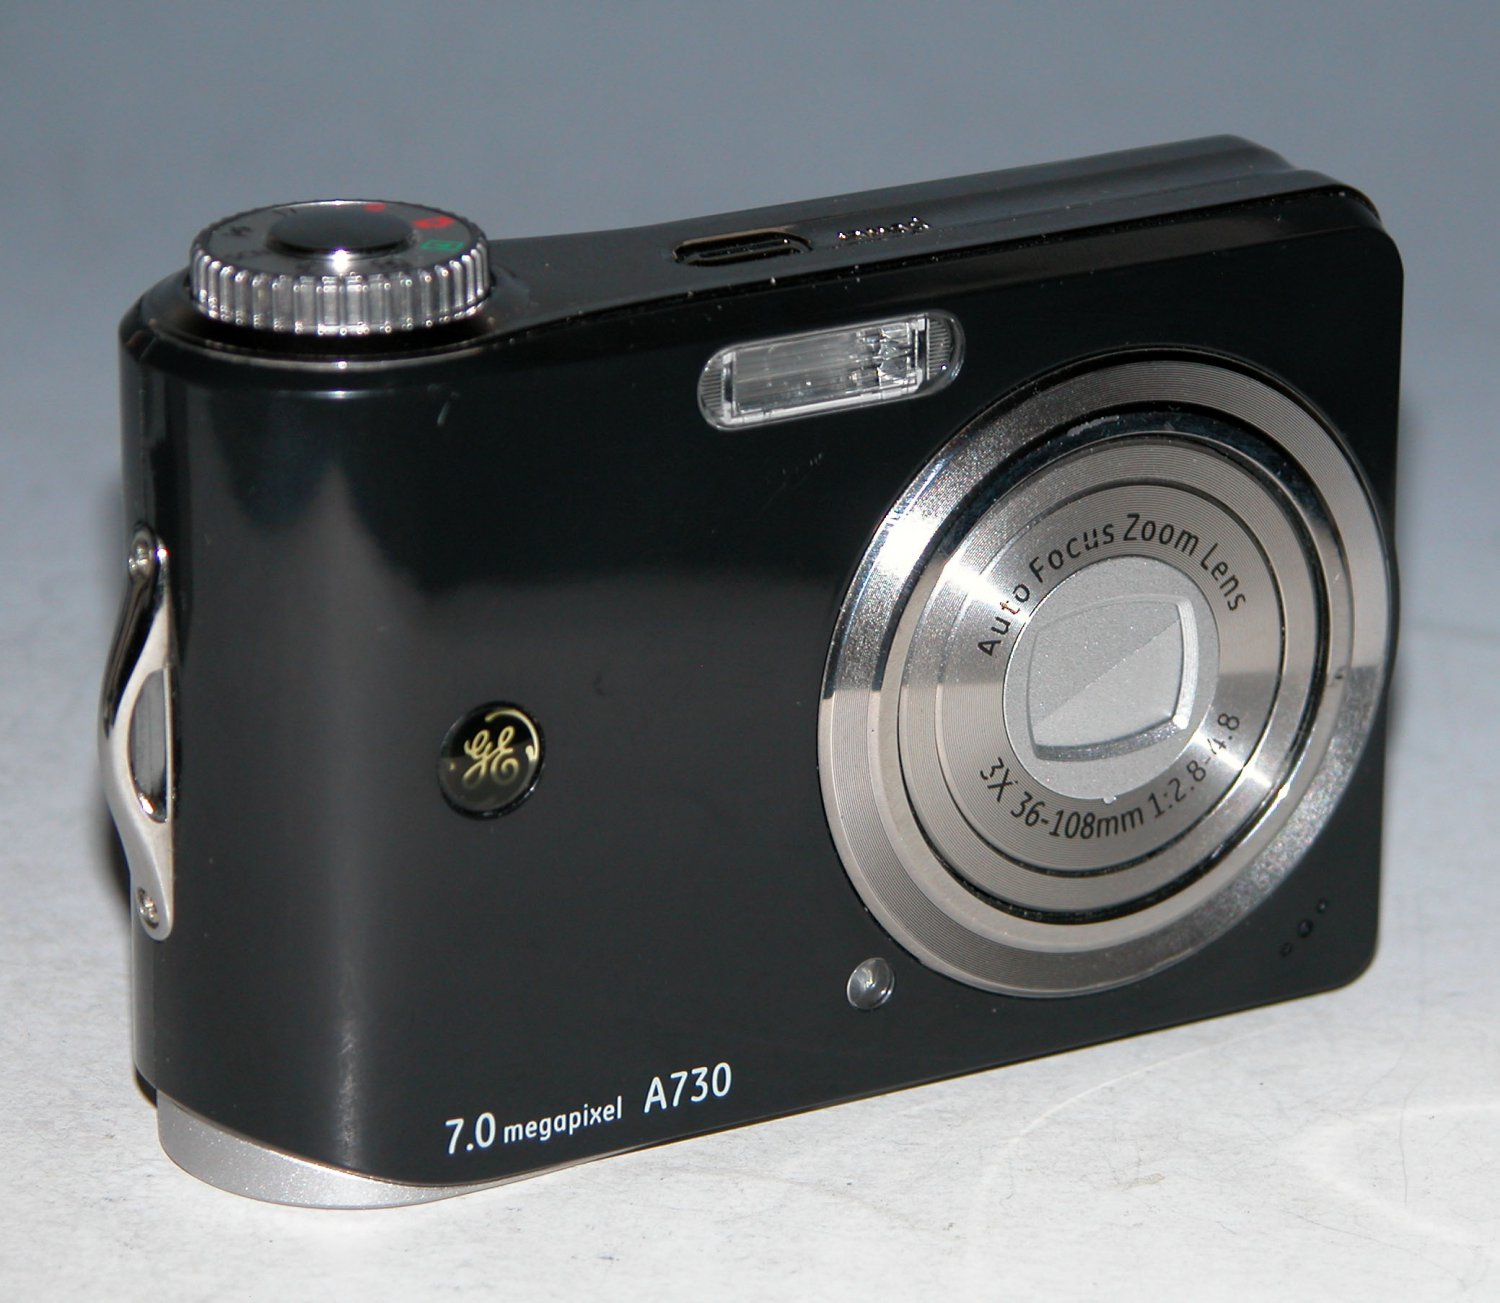 GE Smart Series A730 7.0MP Digital Camera - Black  #2653